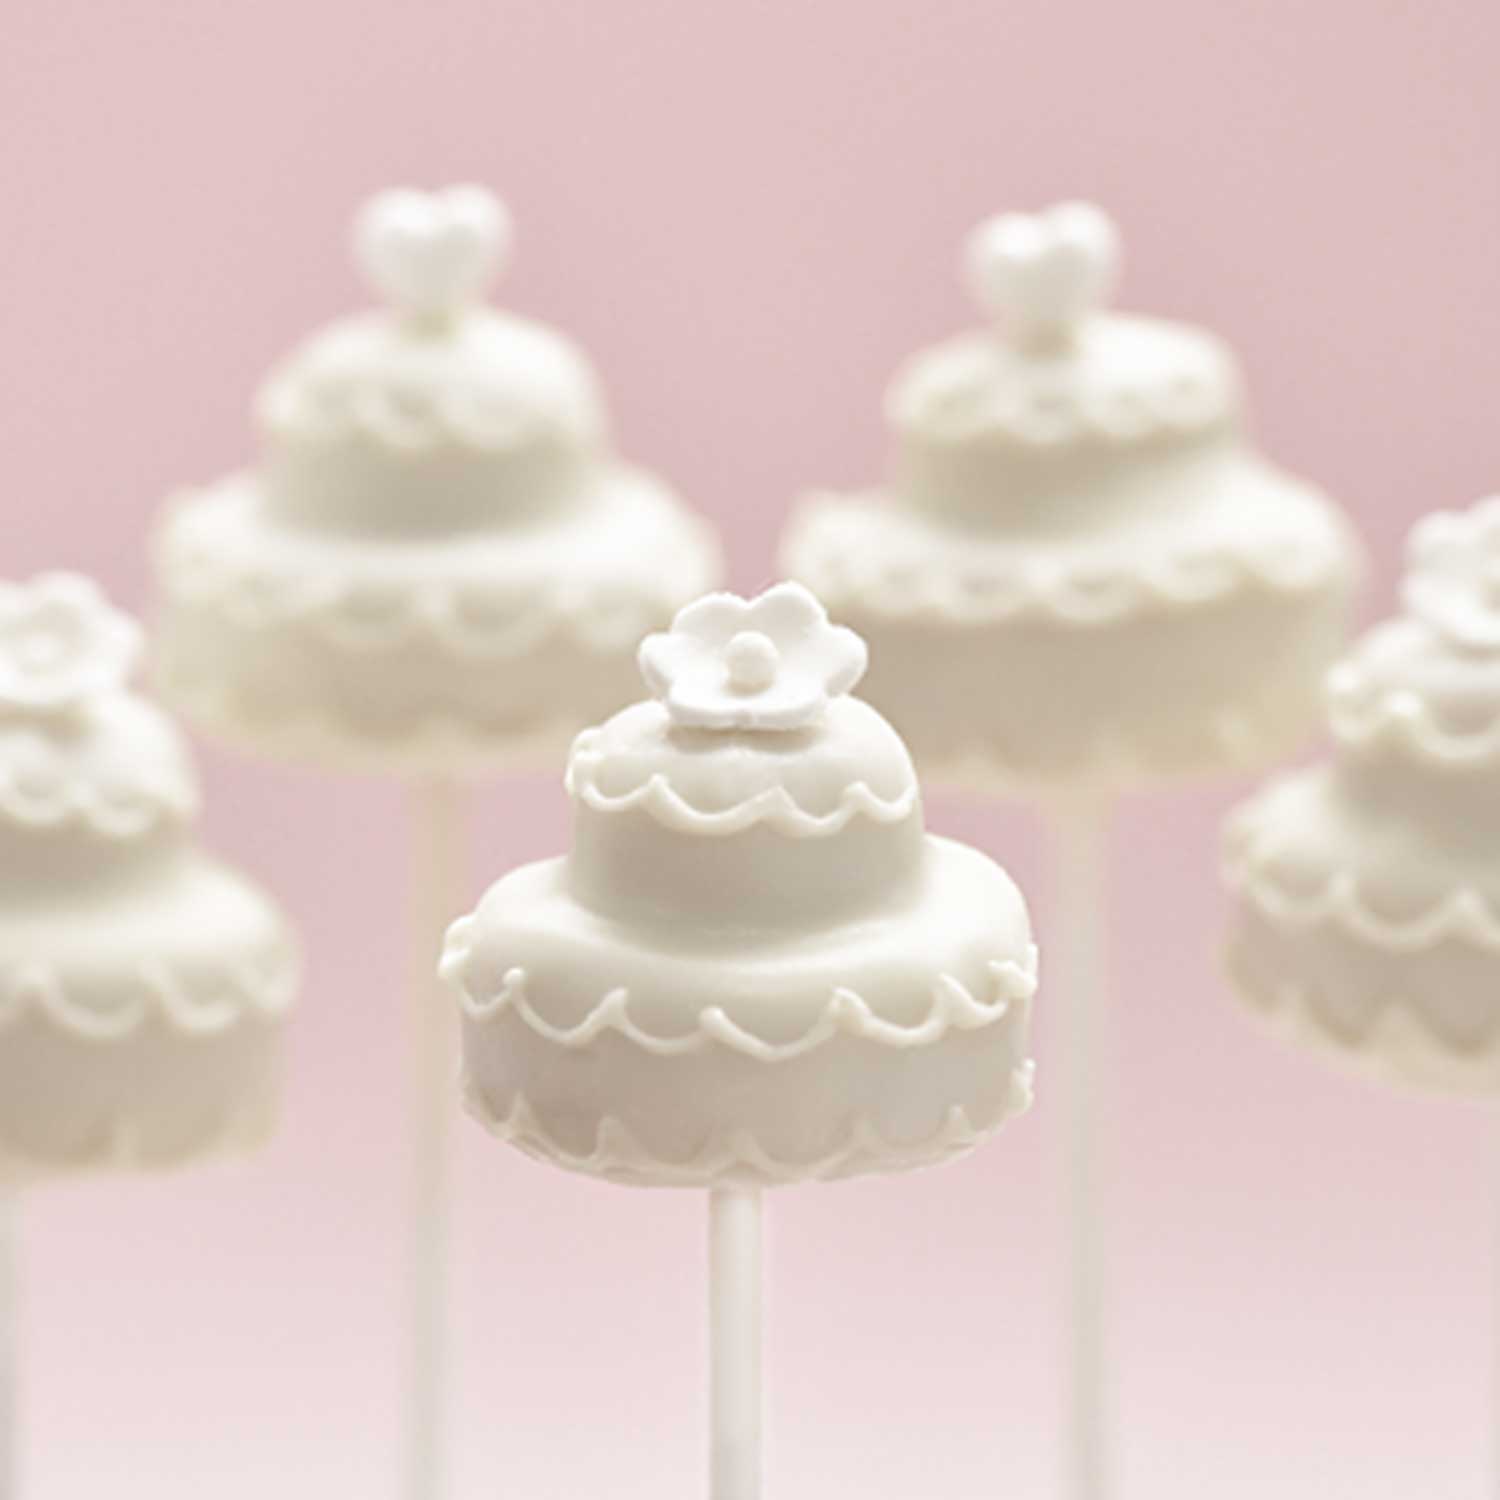  Sweet Creations Round Cake Pop Press Mold - Pink: Home & Kitchen